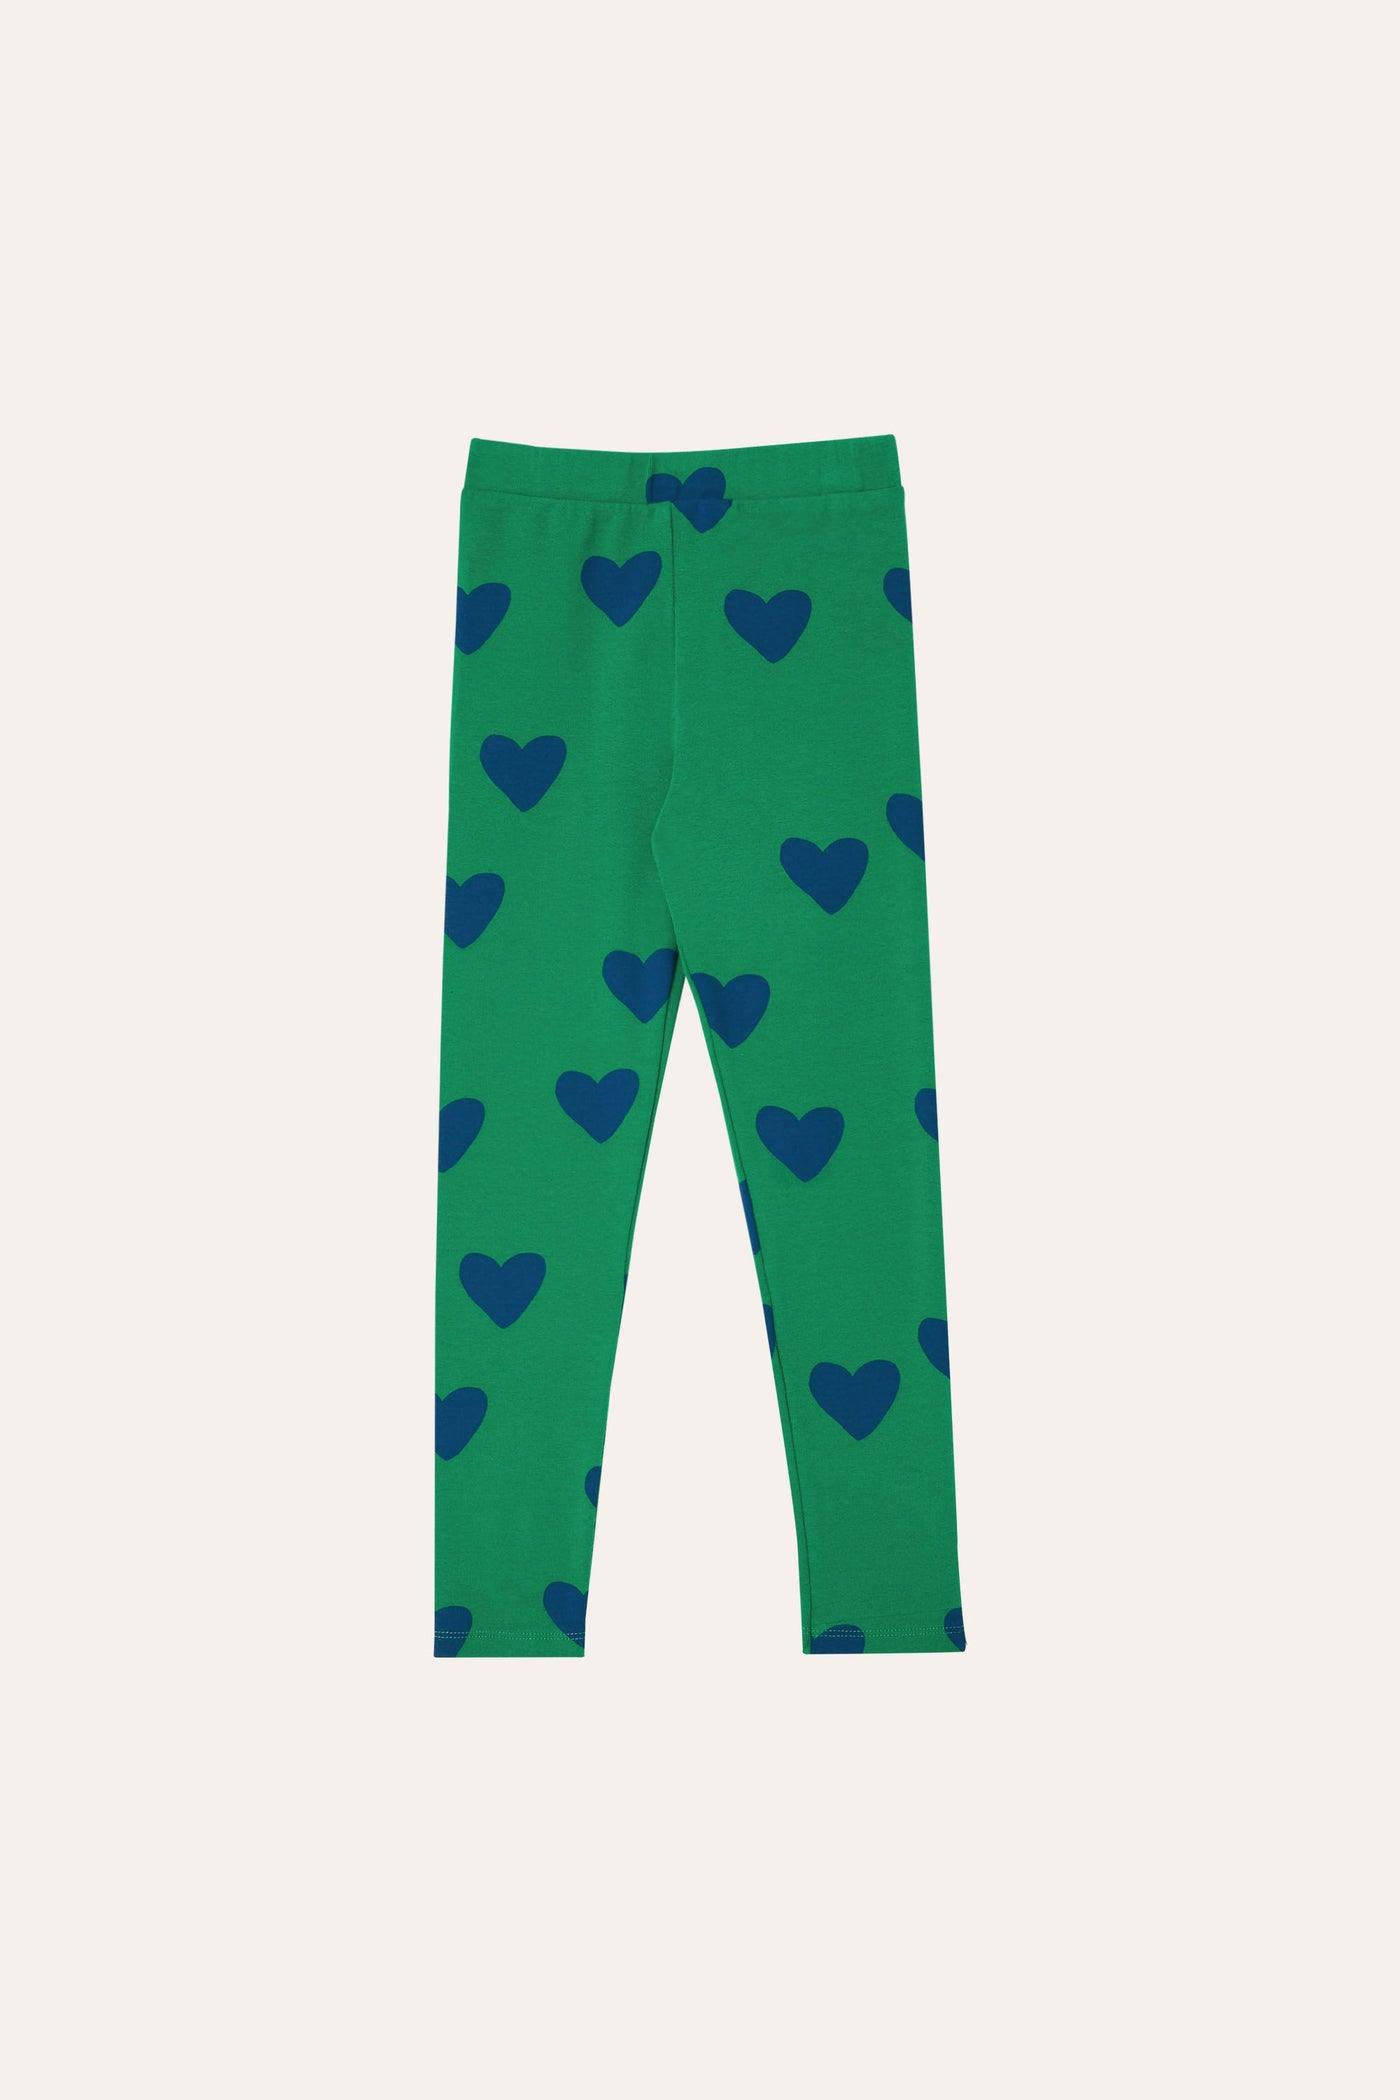 The Campamento heart print leggings